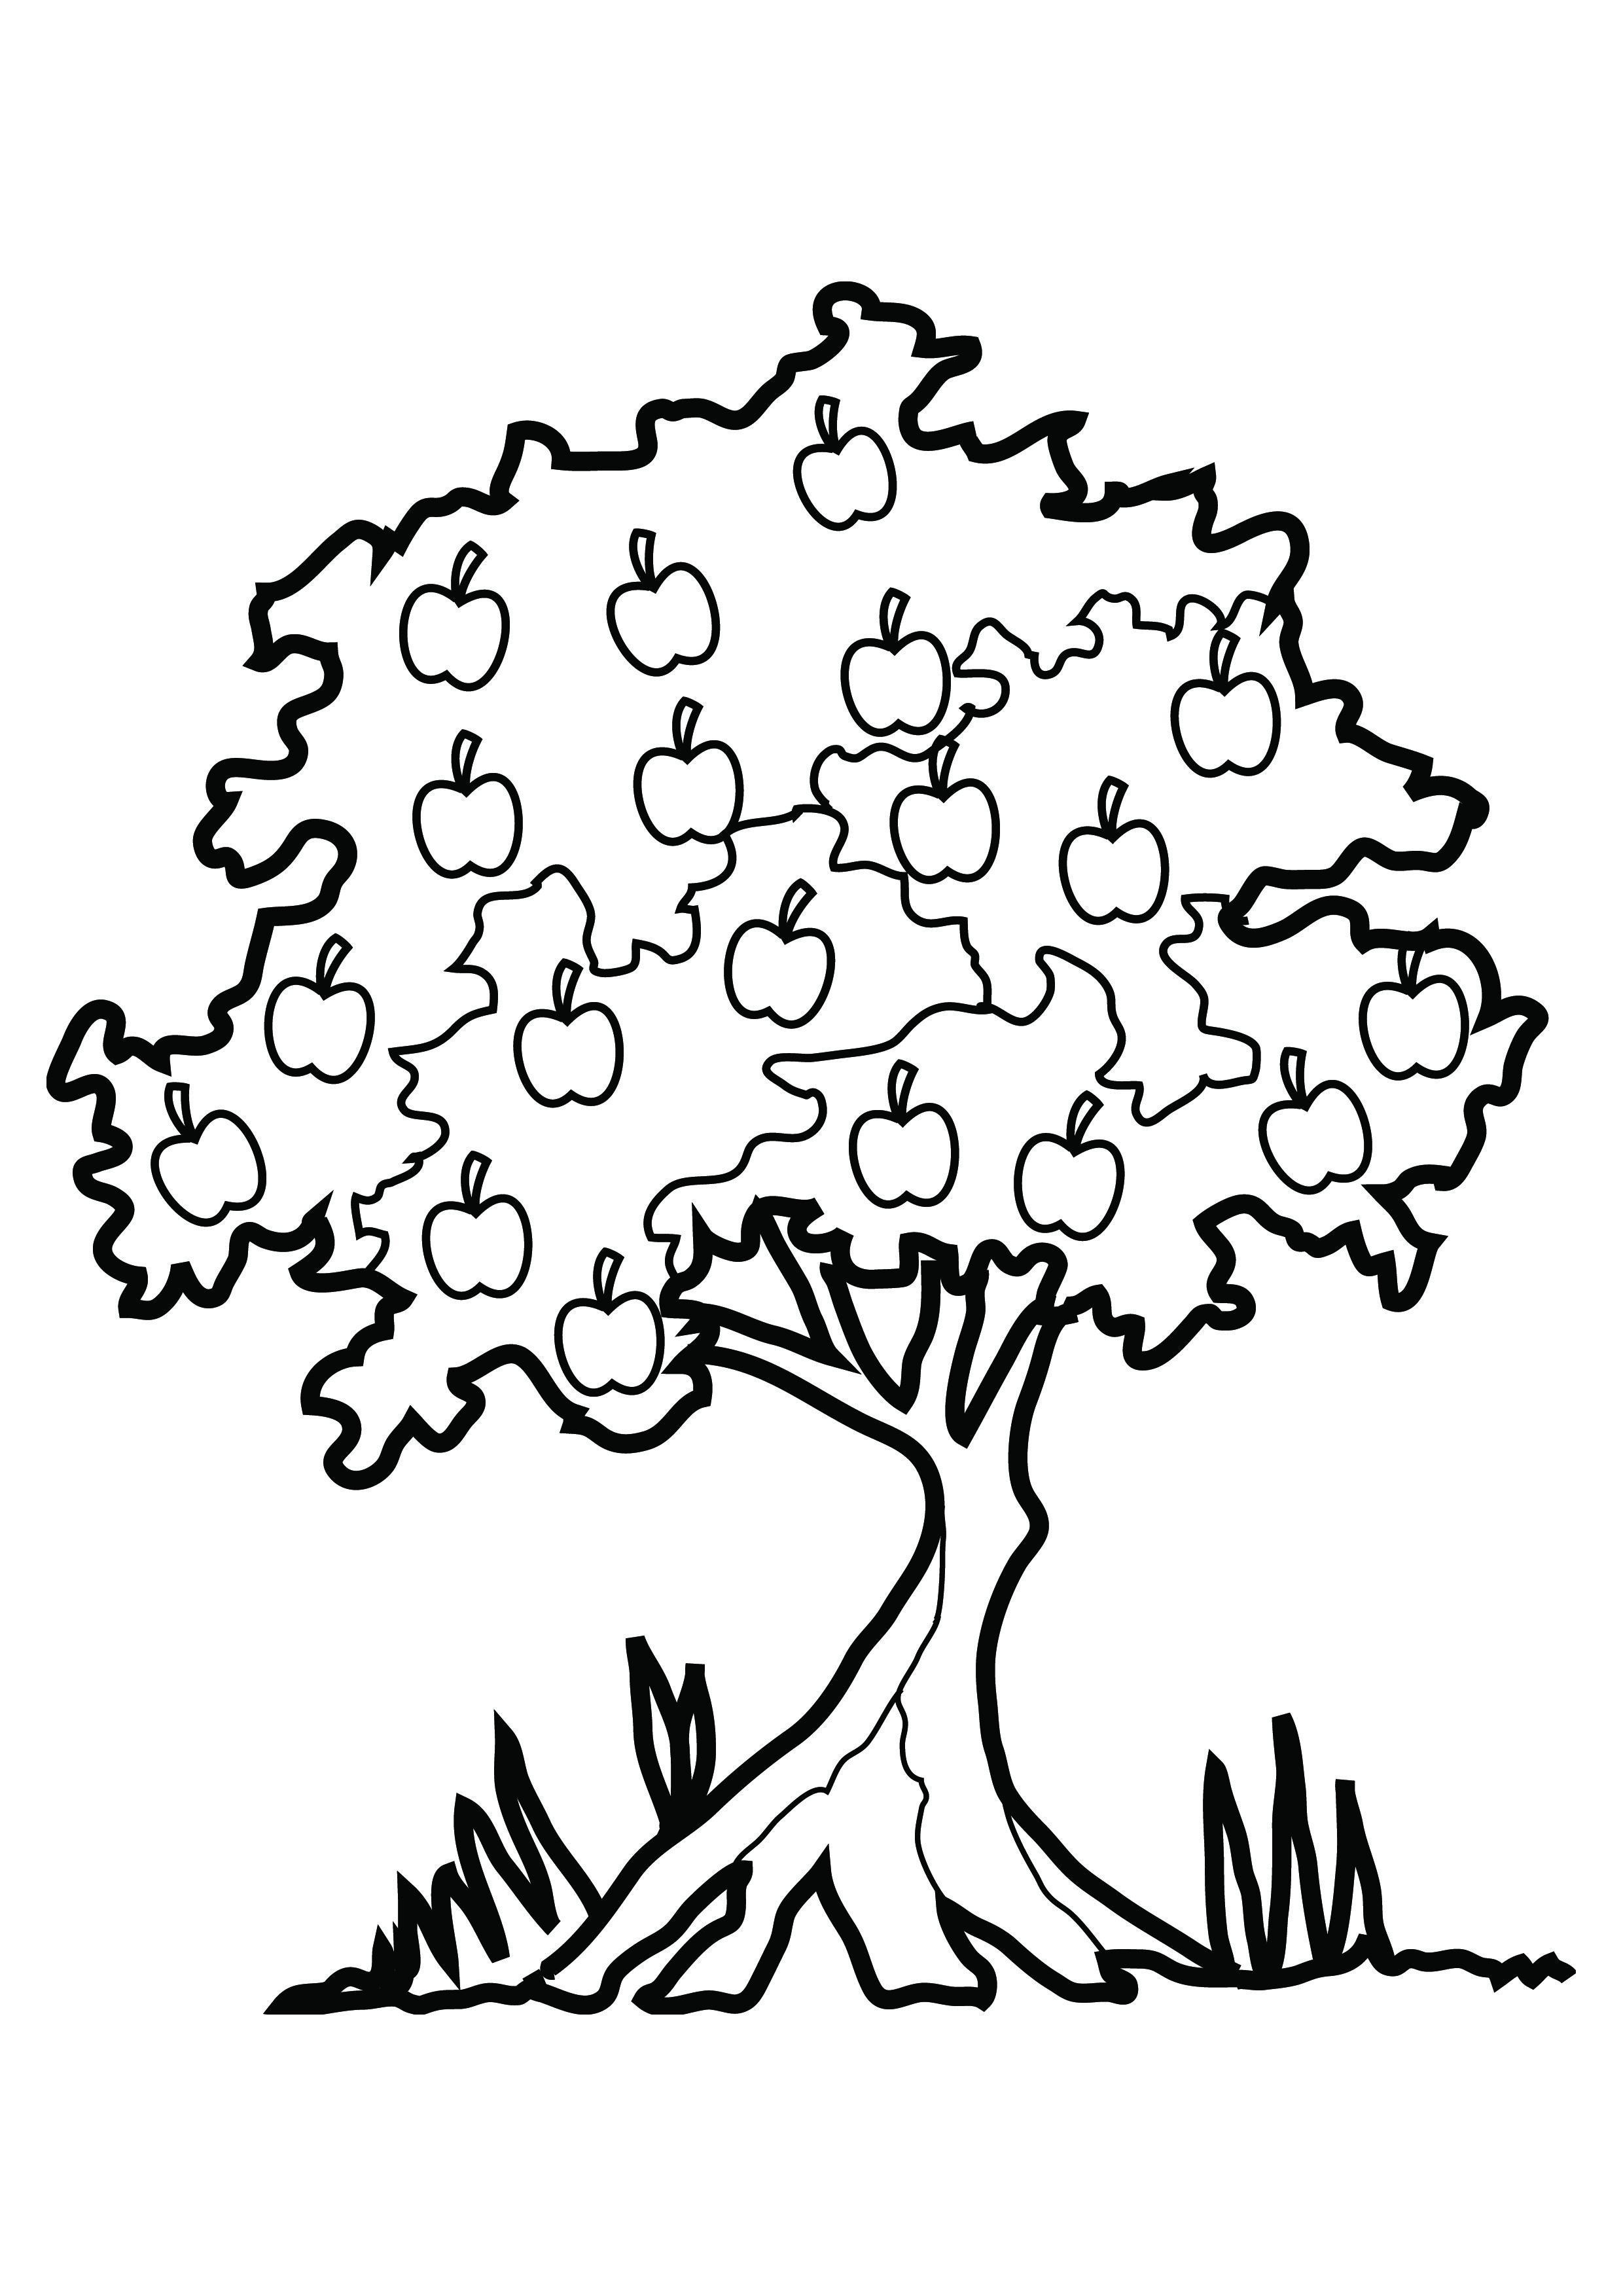 Mango Tree Coloring Page at GetColorings.com | Free printable colorings